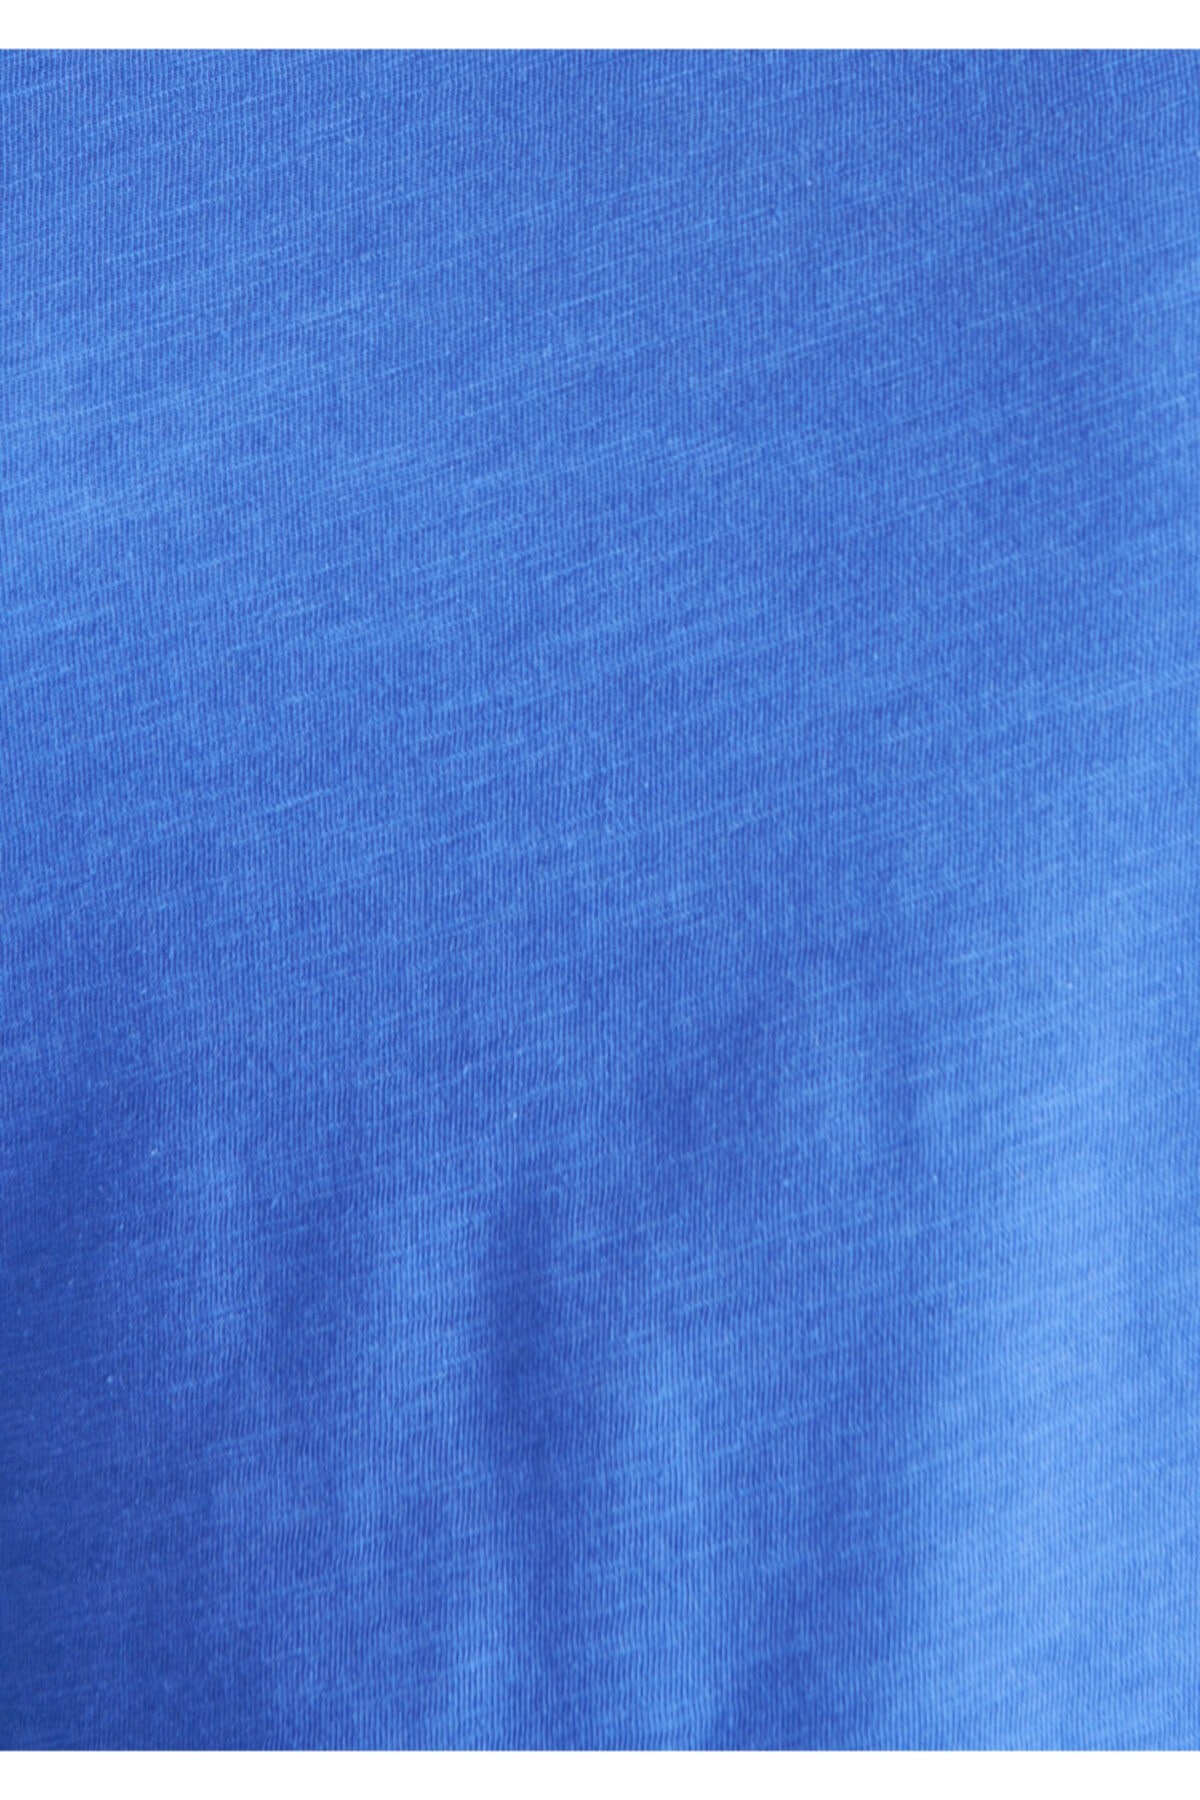 Mavi Jeans Kadın T-Shirt 168260-70616 